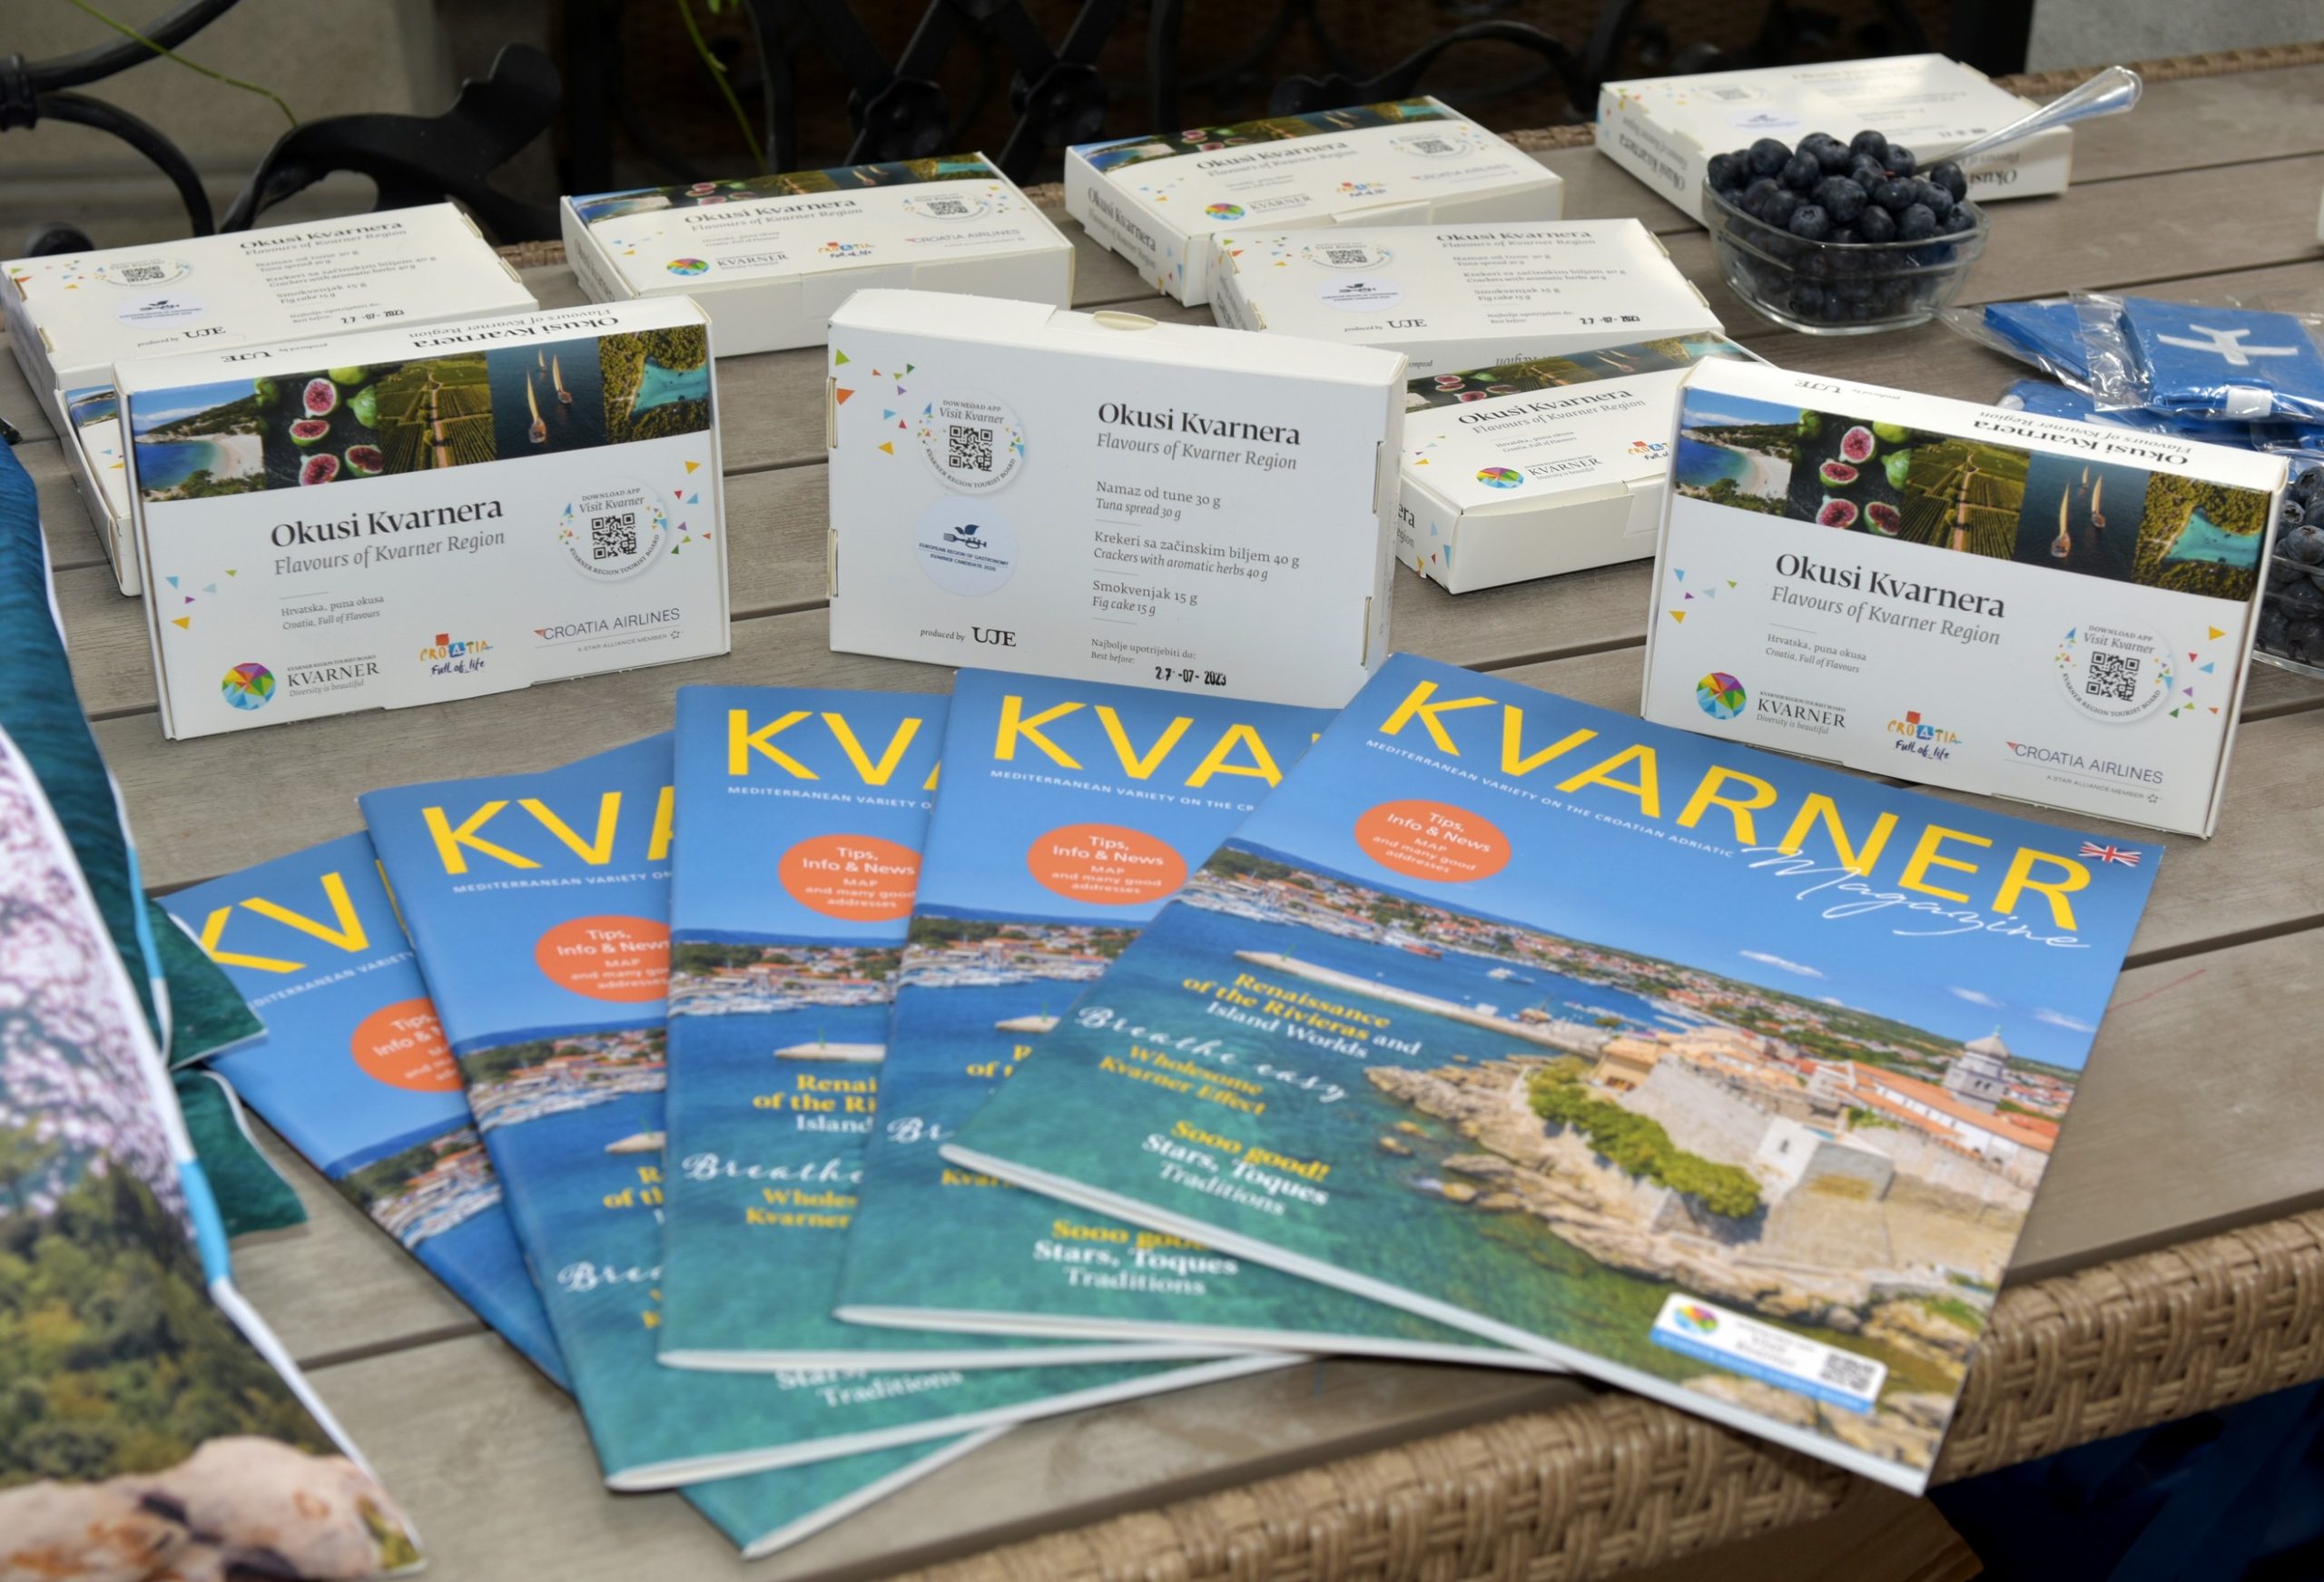 Croatia Airlines to serve Kvarner specialties on its flights